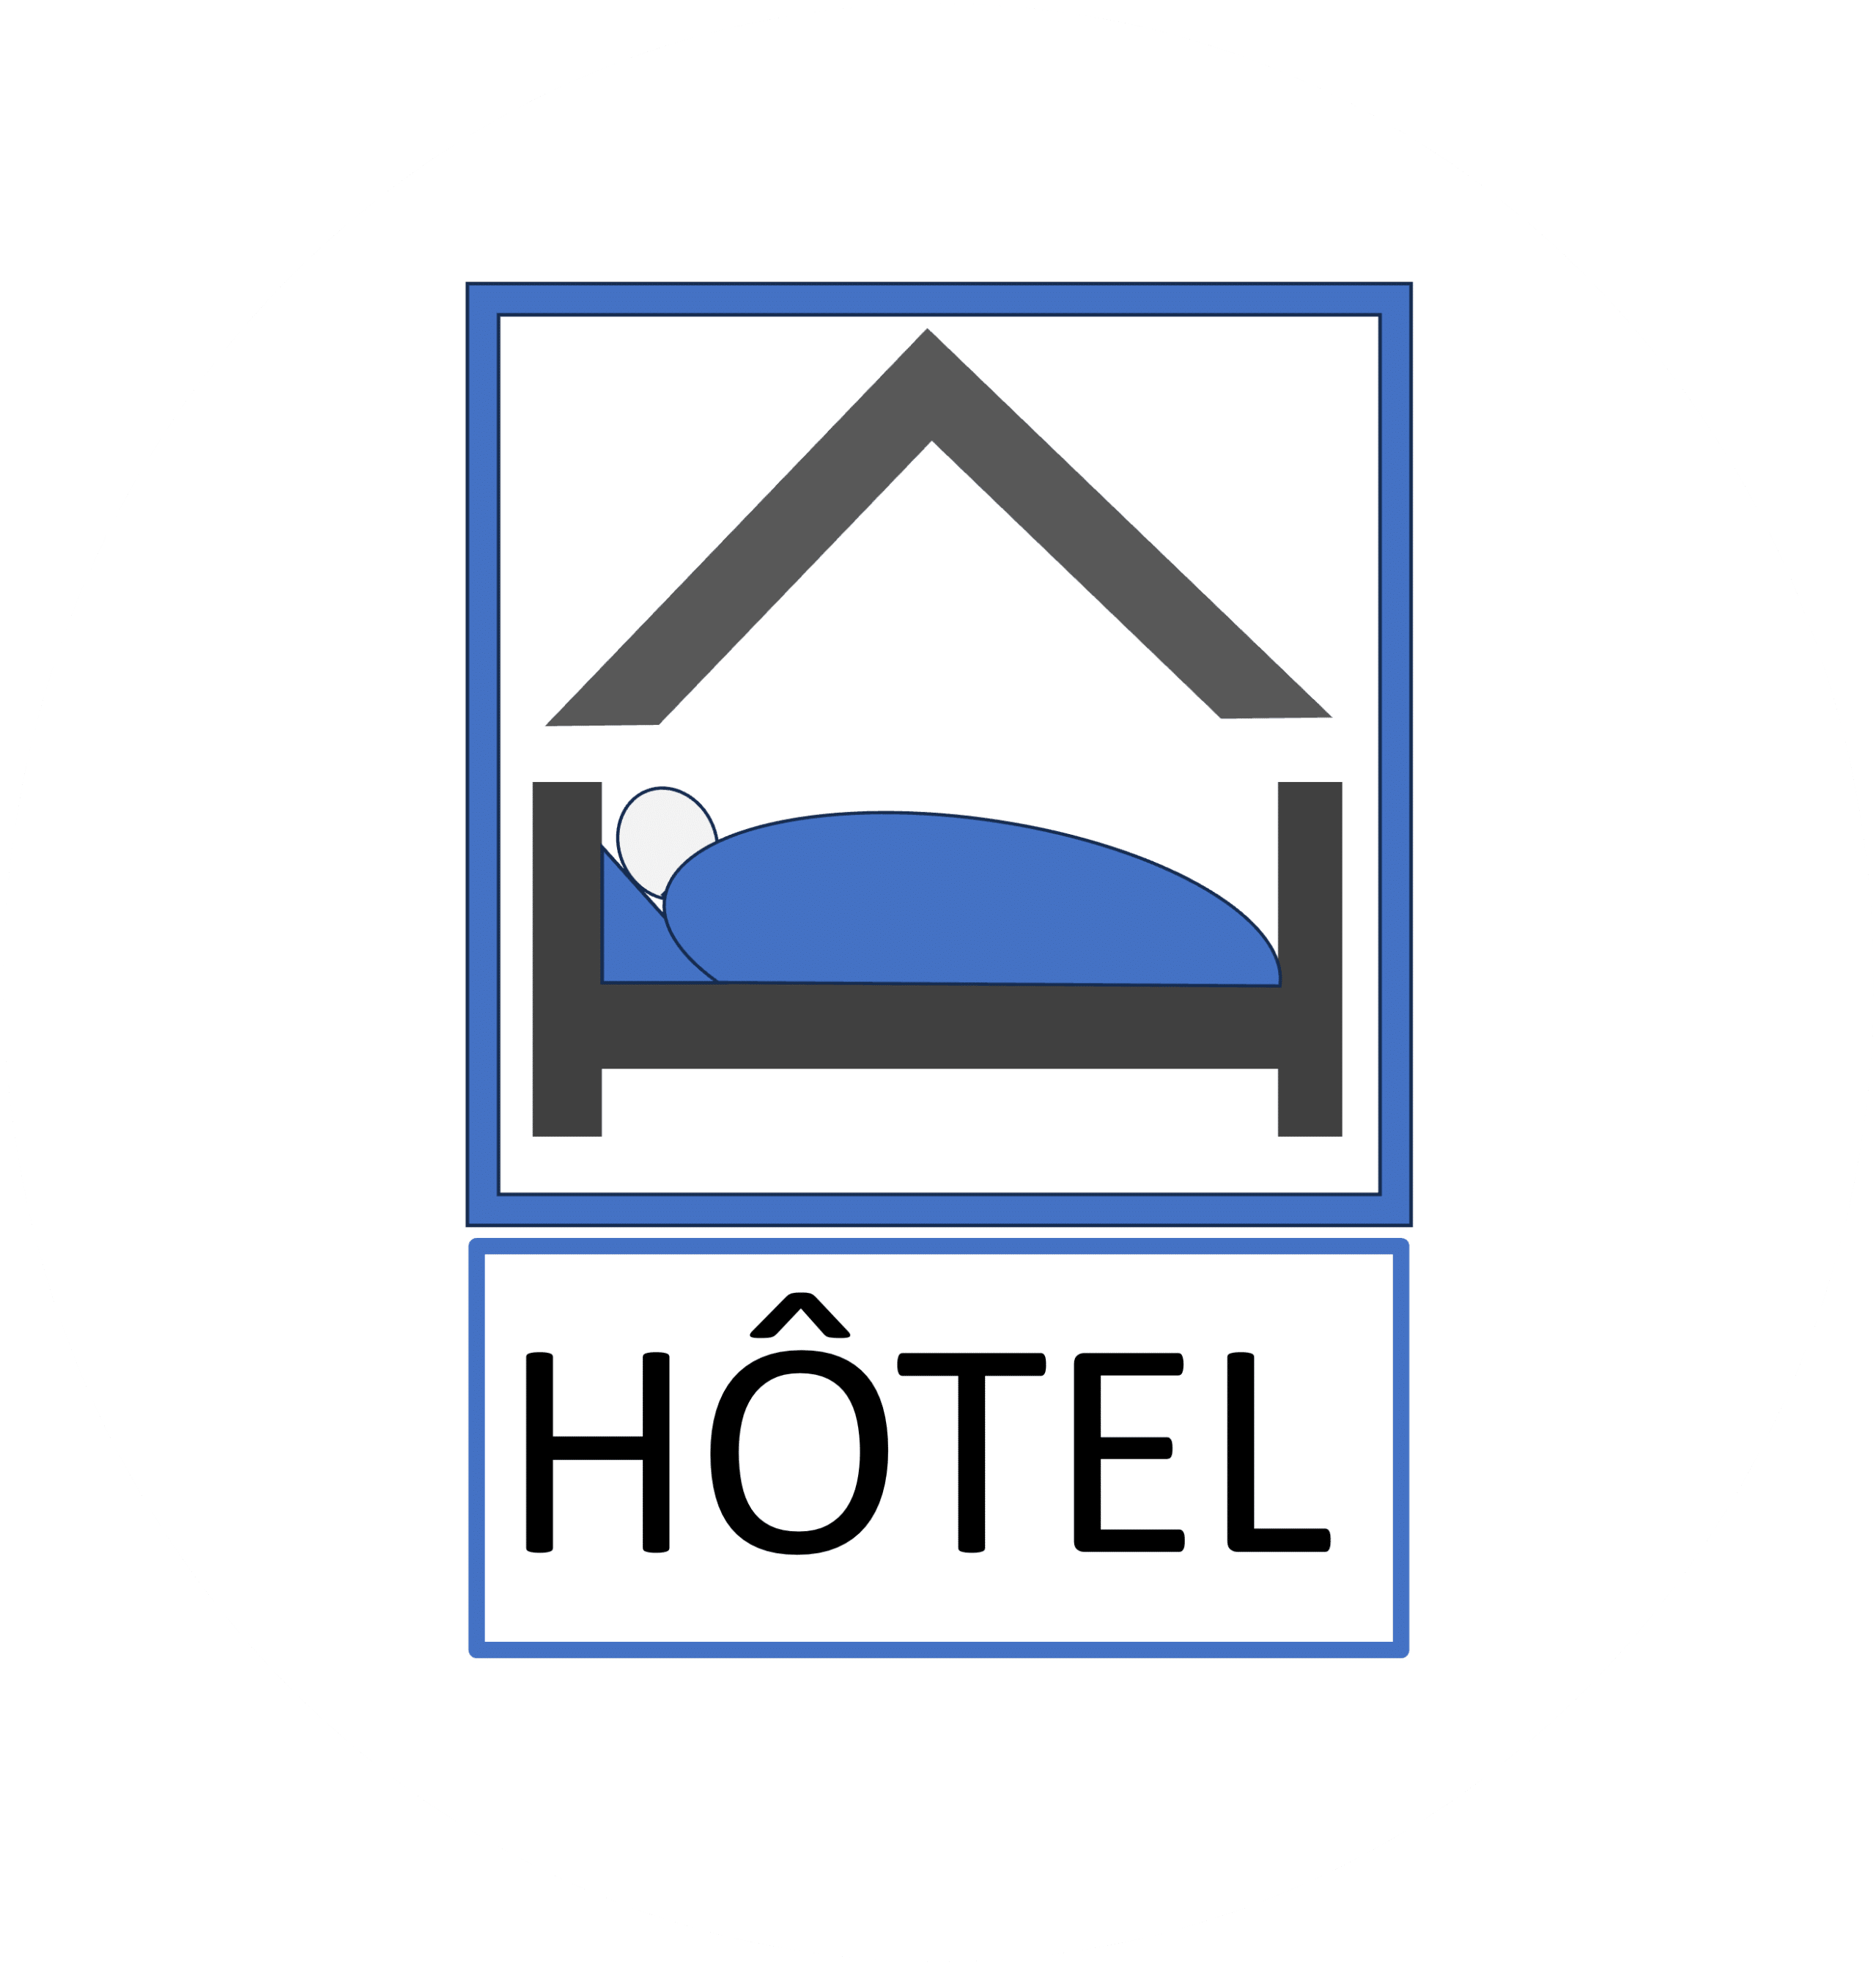 Symbolise un hotel